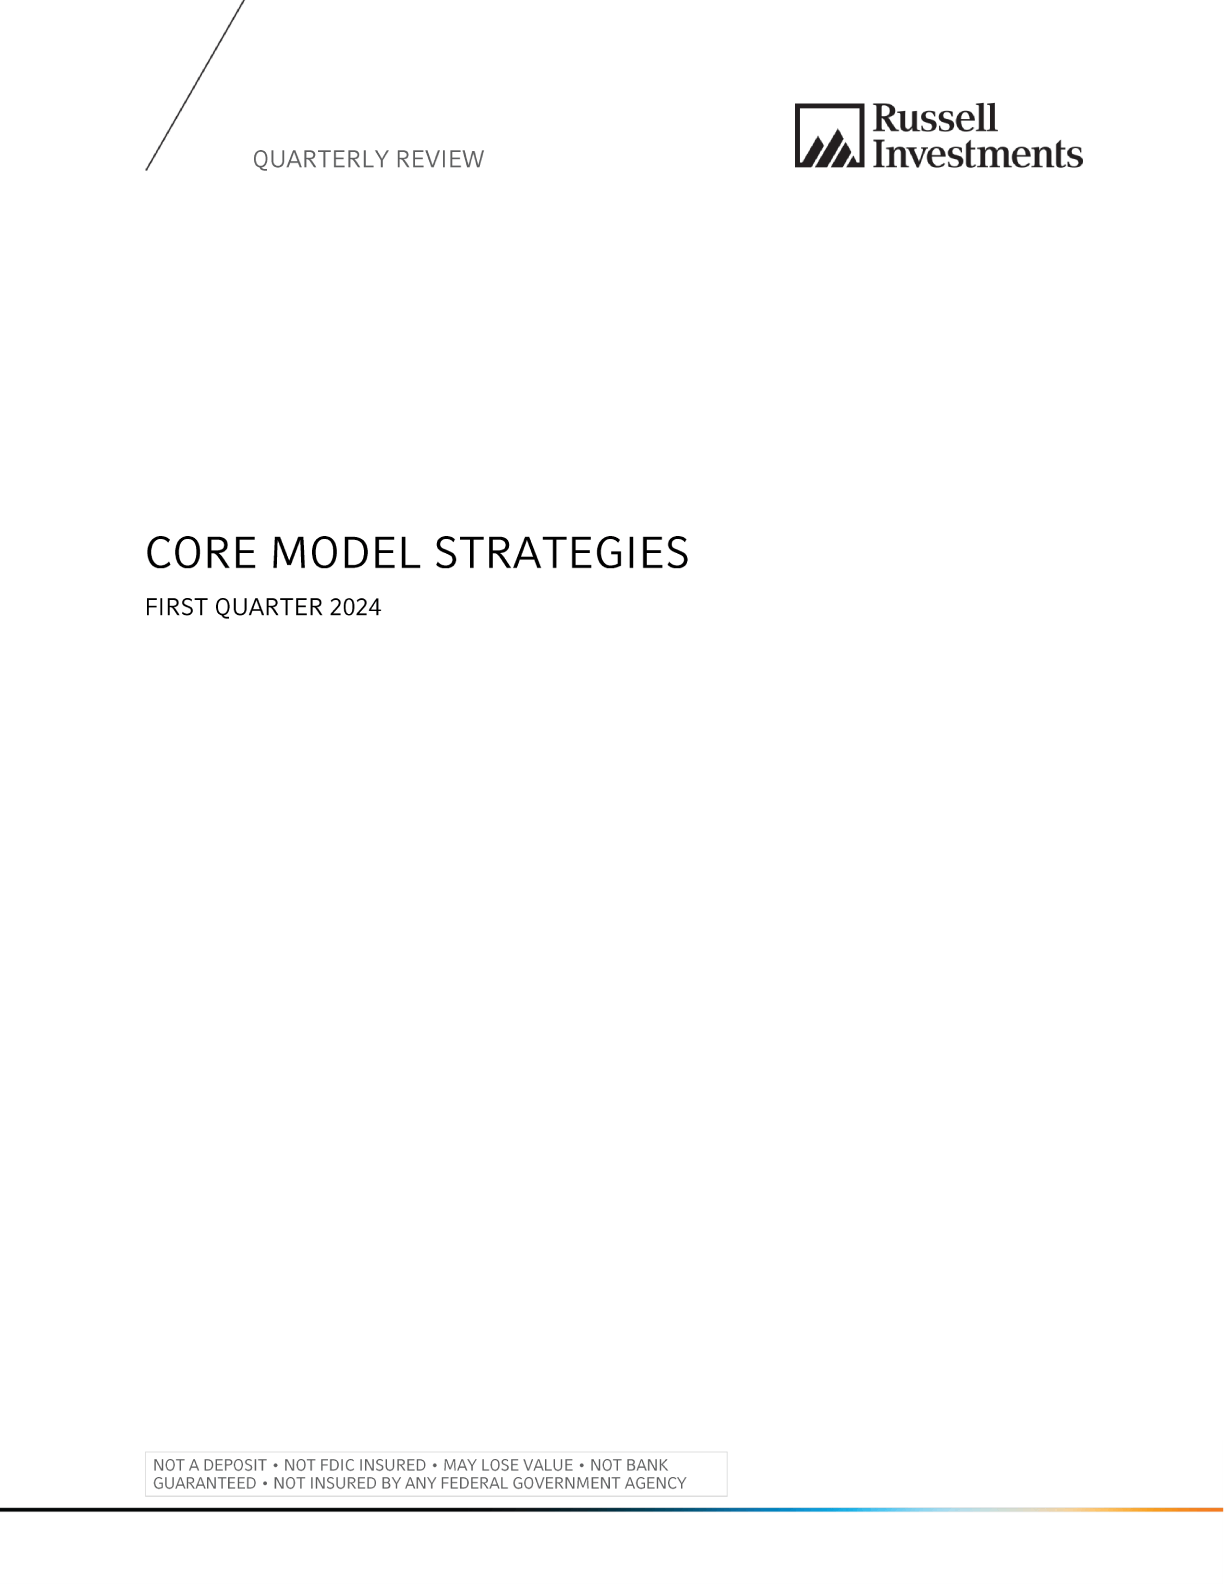 Core Models Quarterly Review Thumbnail